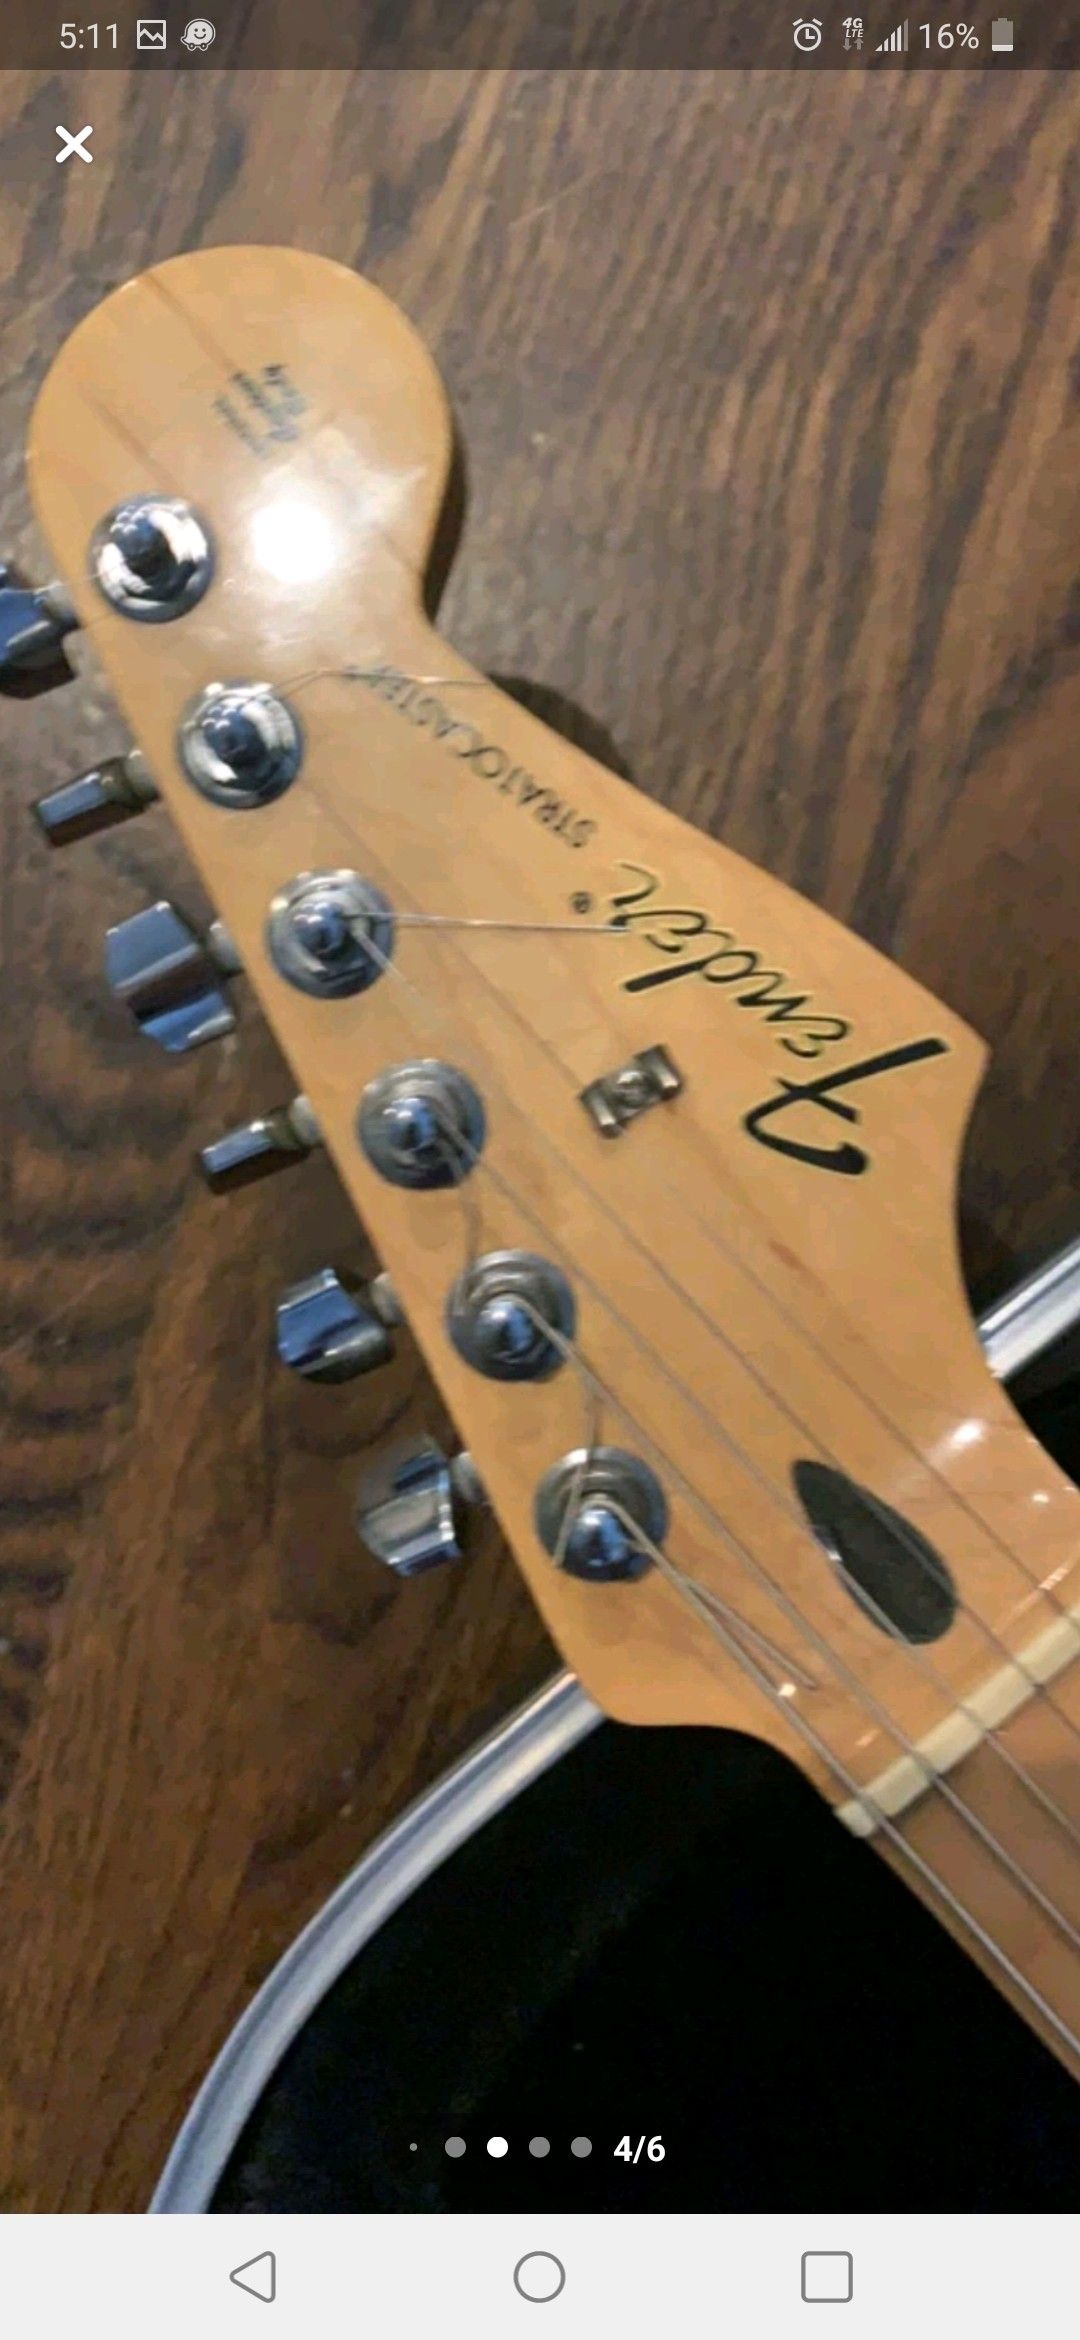 Fender Stratocaster mim